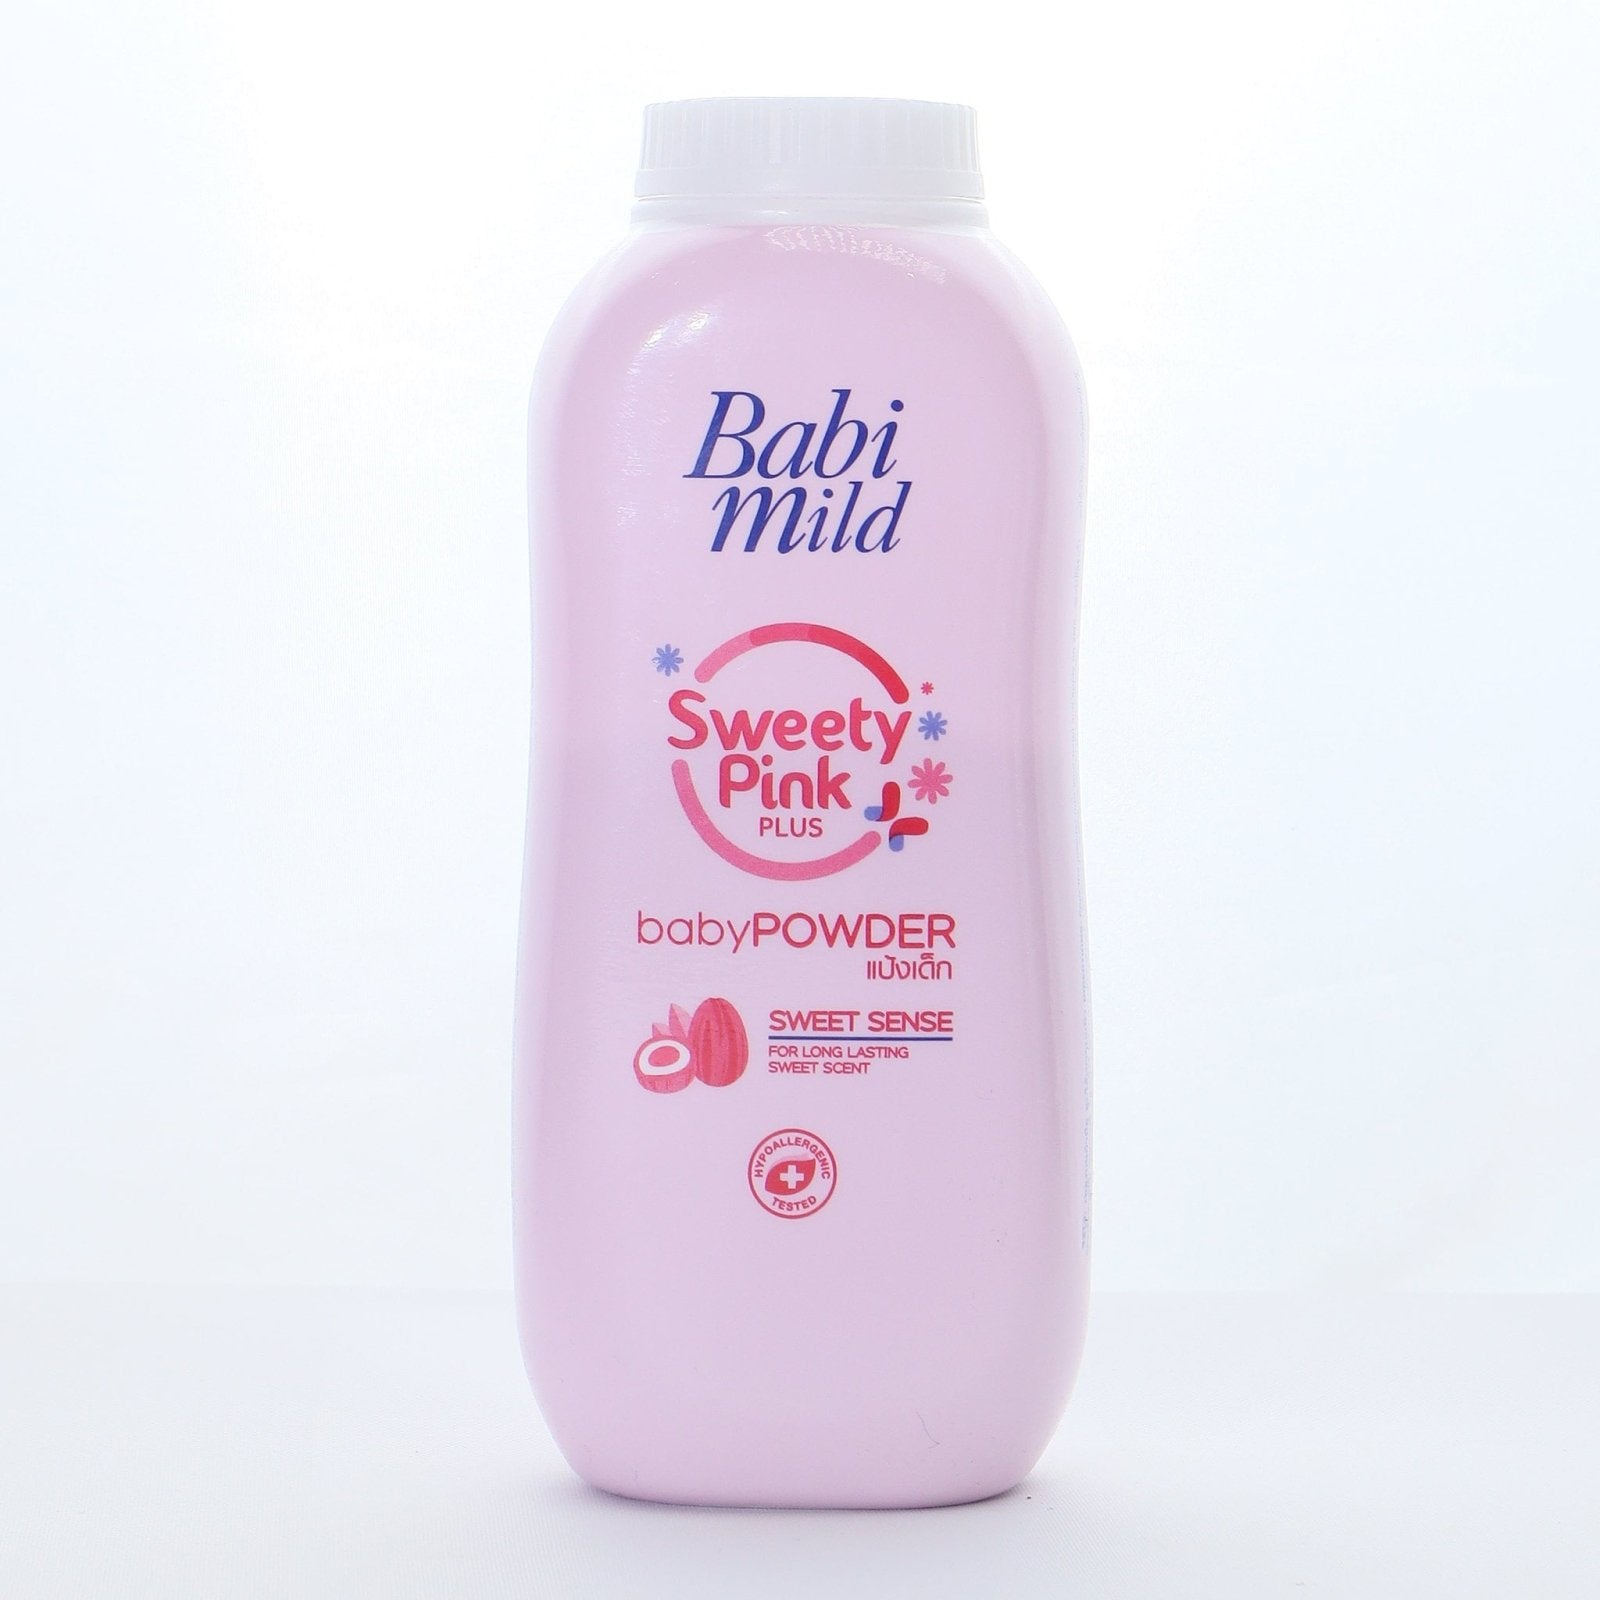 Baby Powder Sweety Pink Plus 160g | Babi Mild - Zubaidas Mothershop